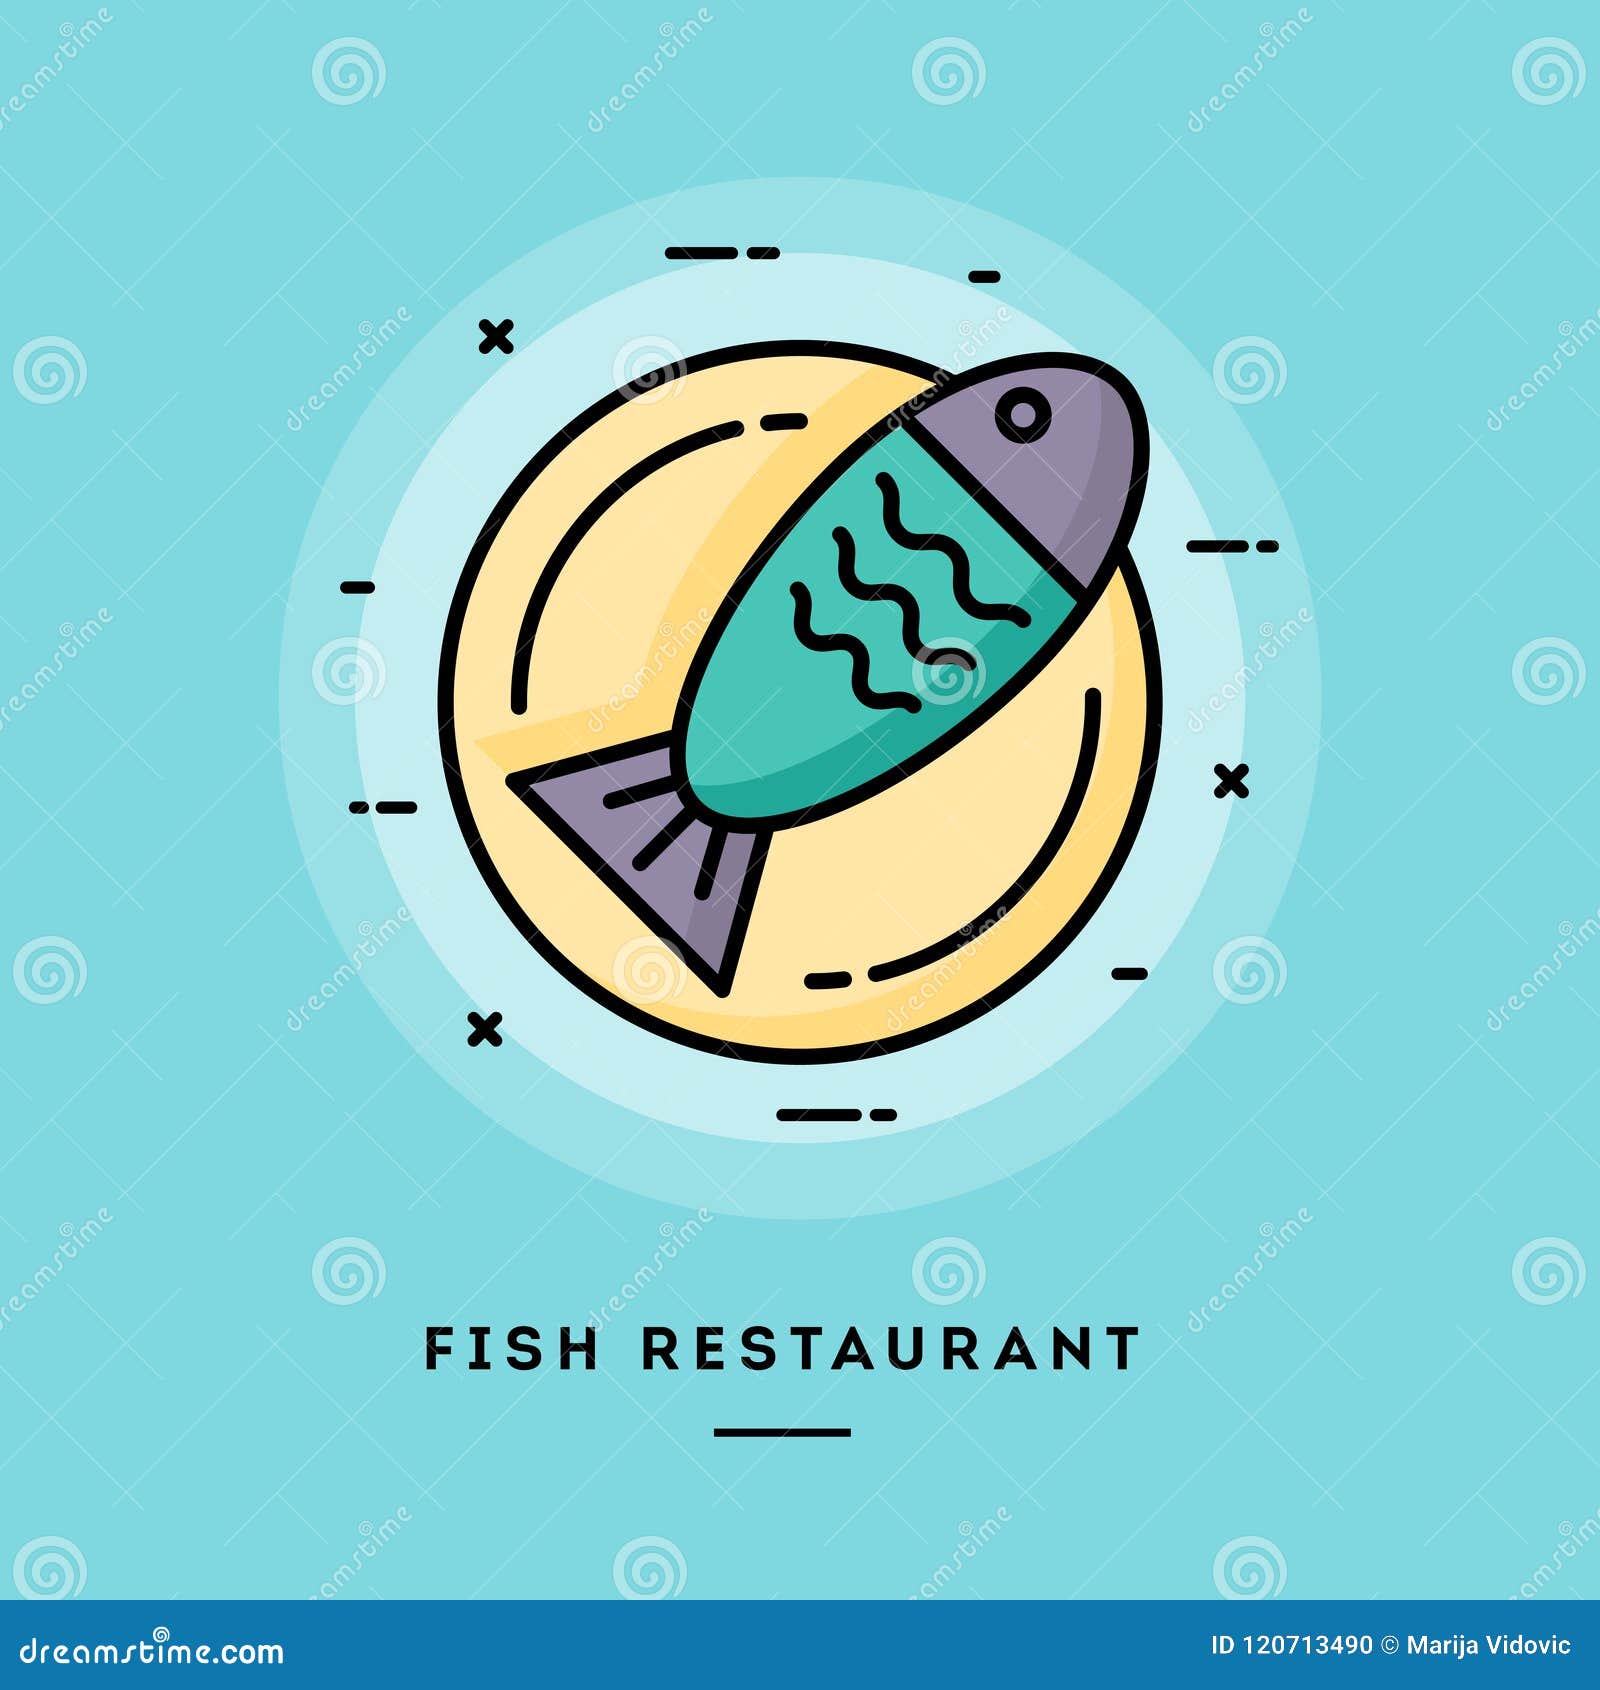 Fish Restaurant, Flat Design Thin Line Banner Stock Illustration ...